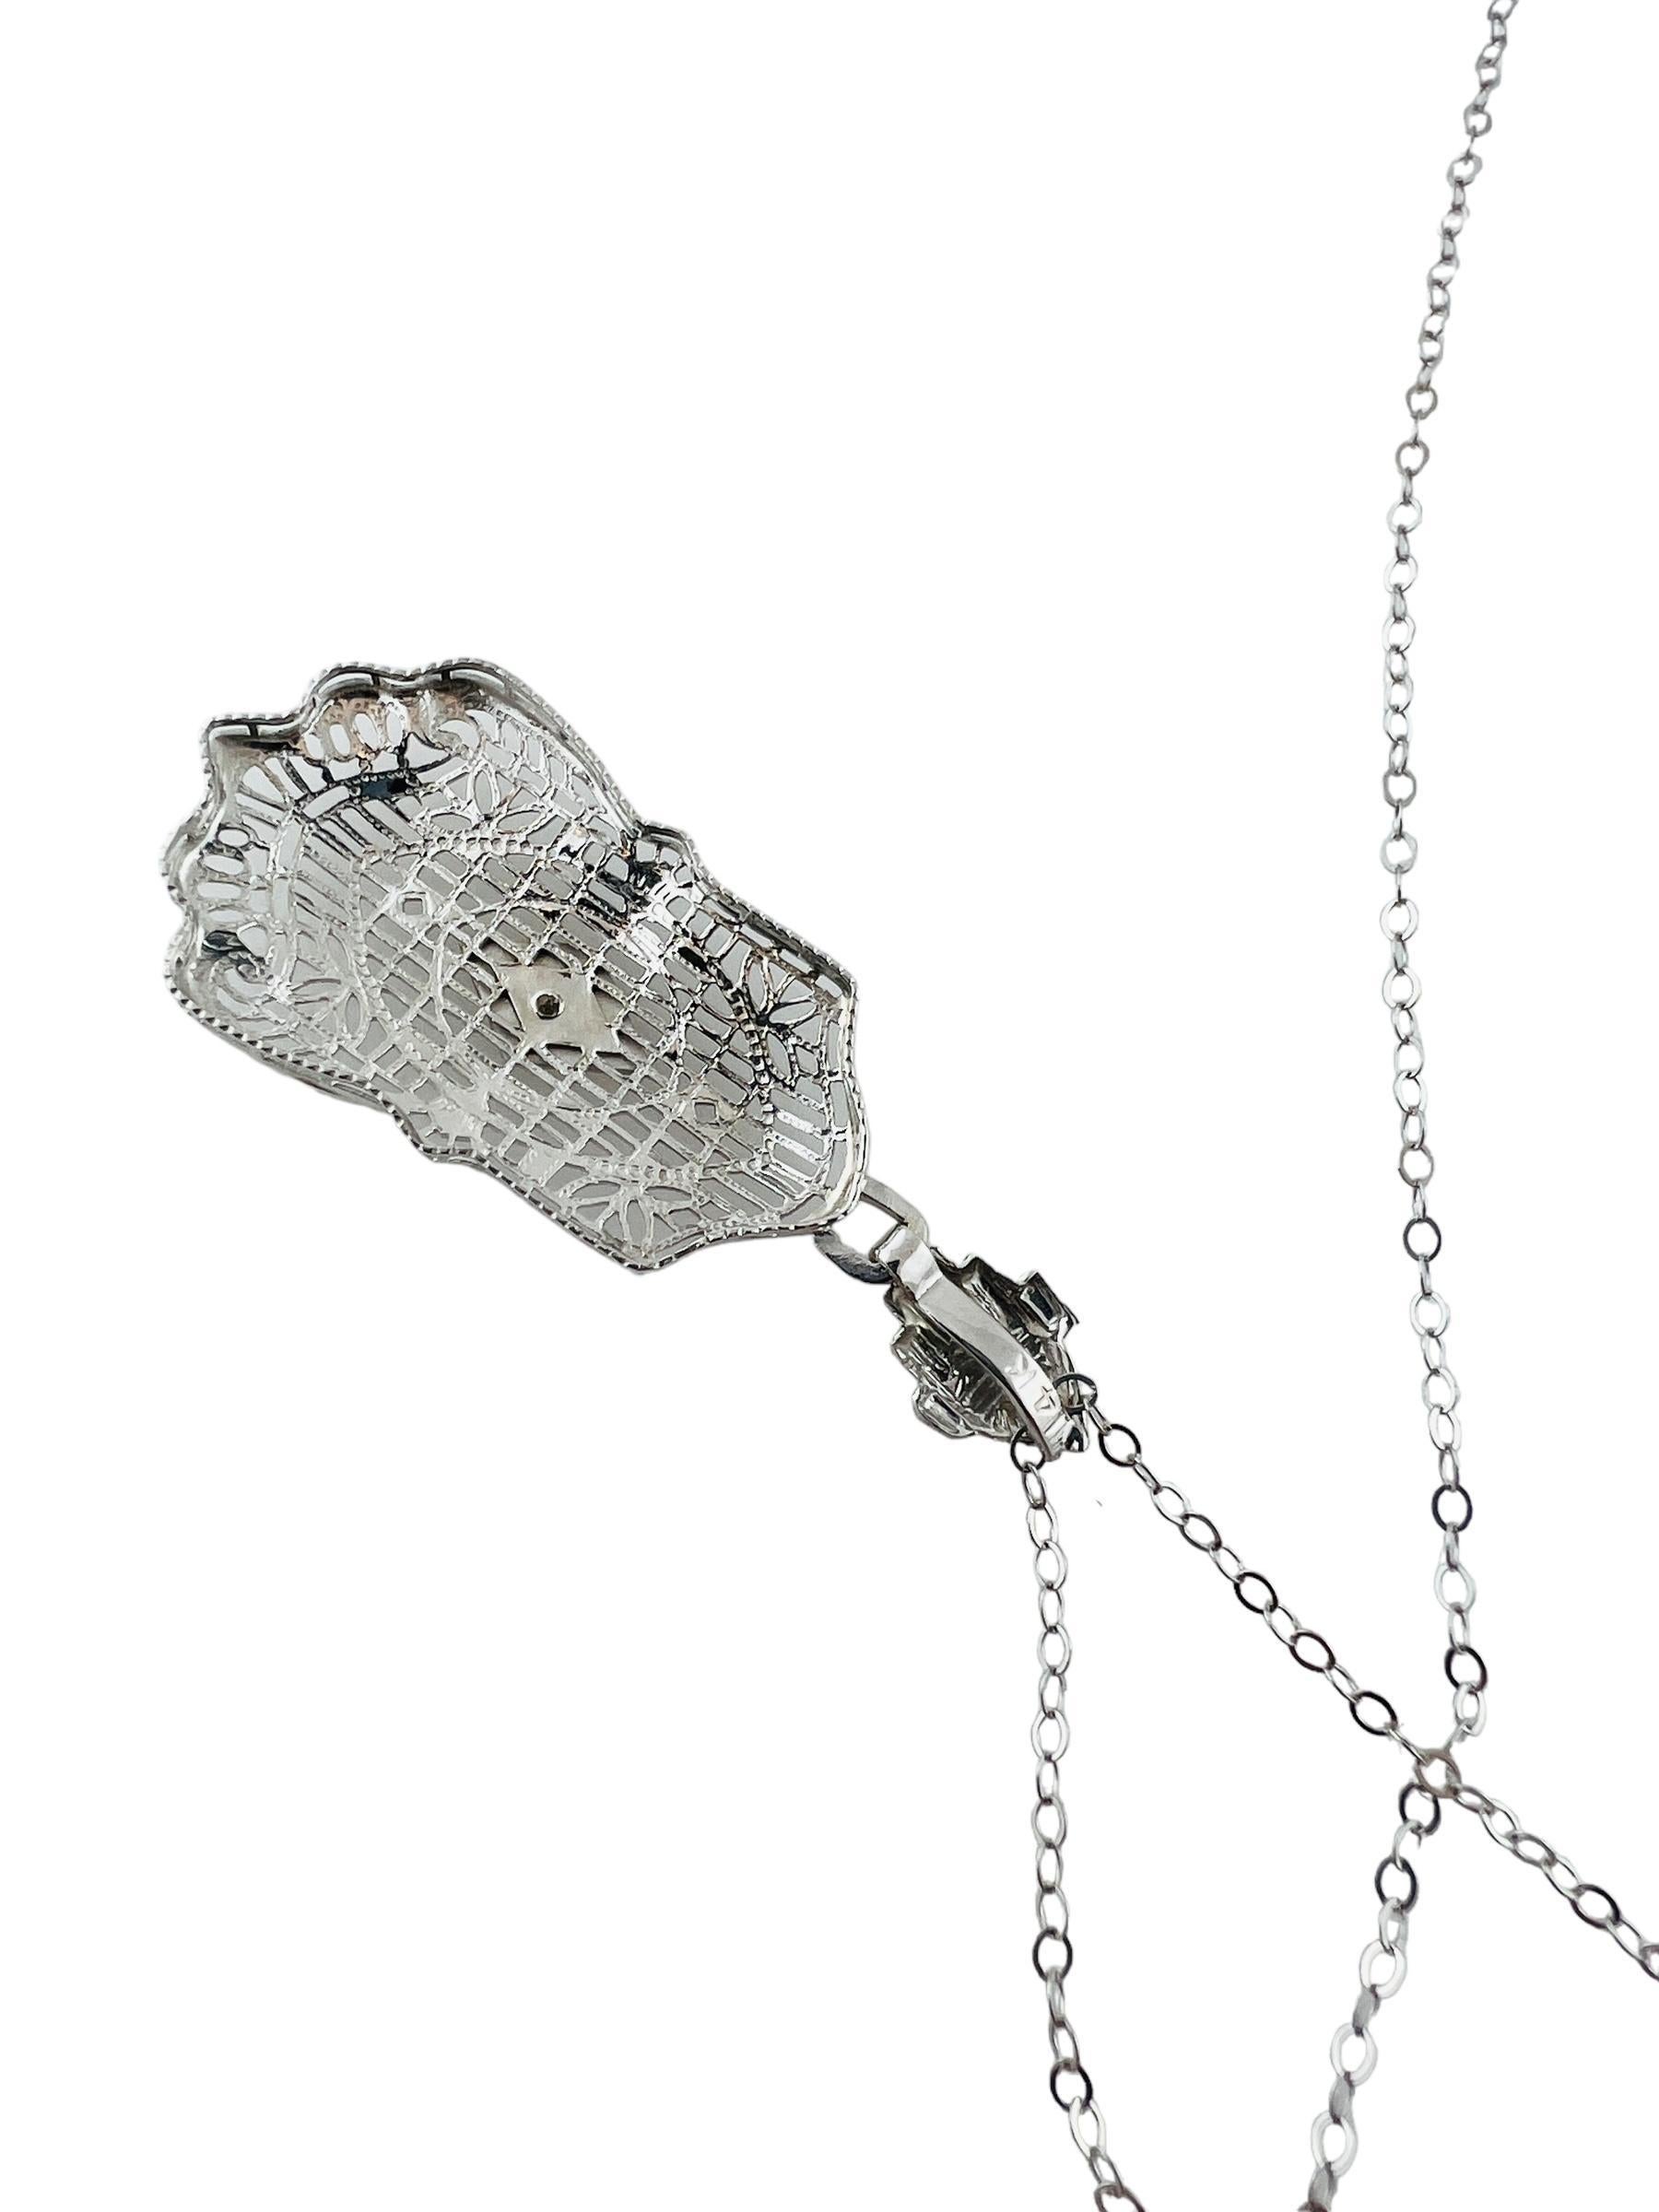 14K White Gold Diamond Filigree Pendant Necklace #16580 For Sale 3